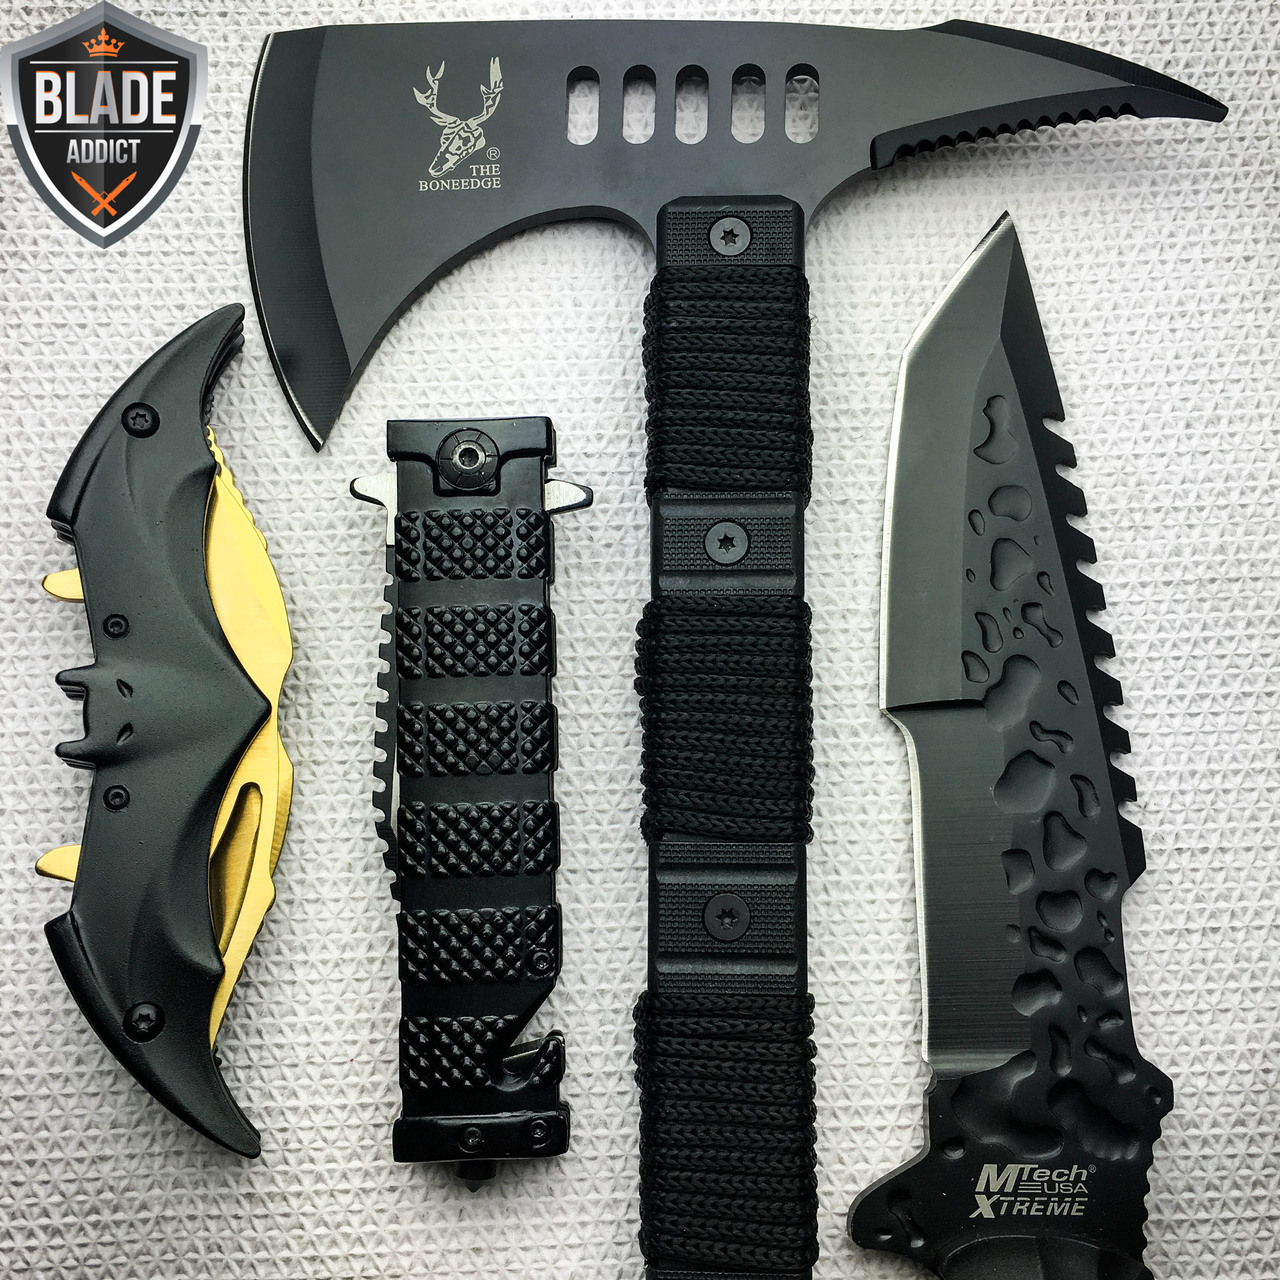 4PC Black Tactical Survival Hunting Combat Camping Pocket Knife Set Axe Pen  EDC